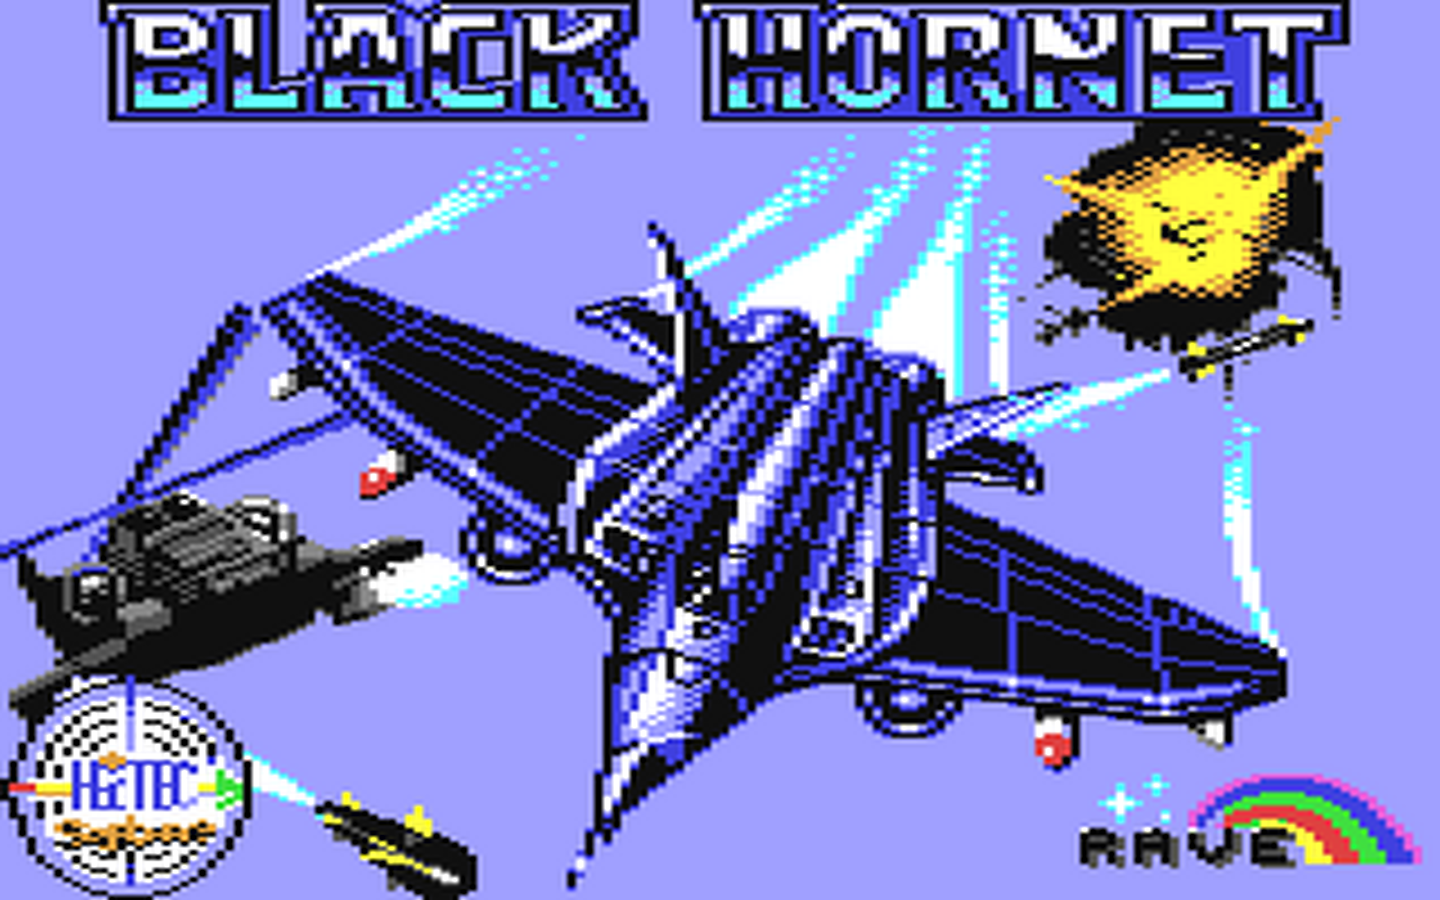 C64 GameBase Black_Hornet Hi-Tec_Software/PAL_Developments 1992